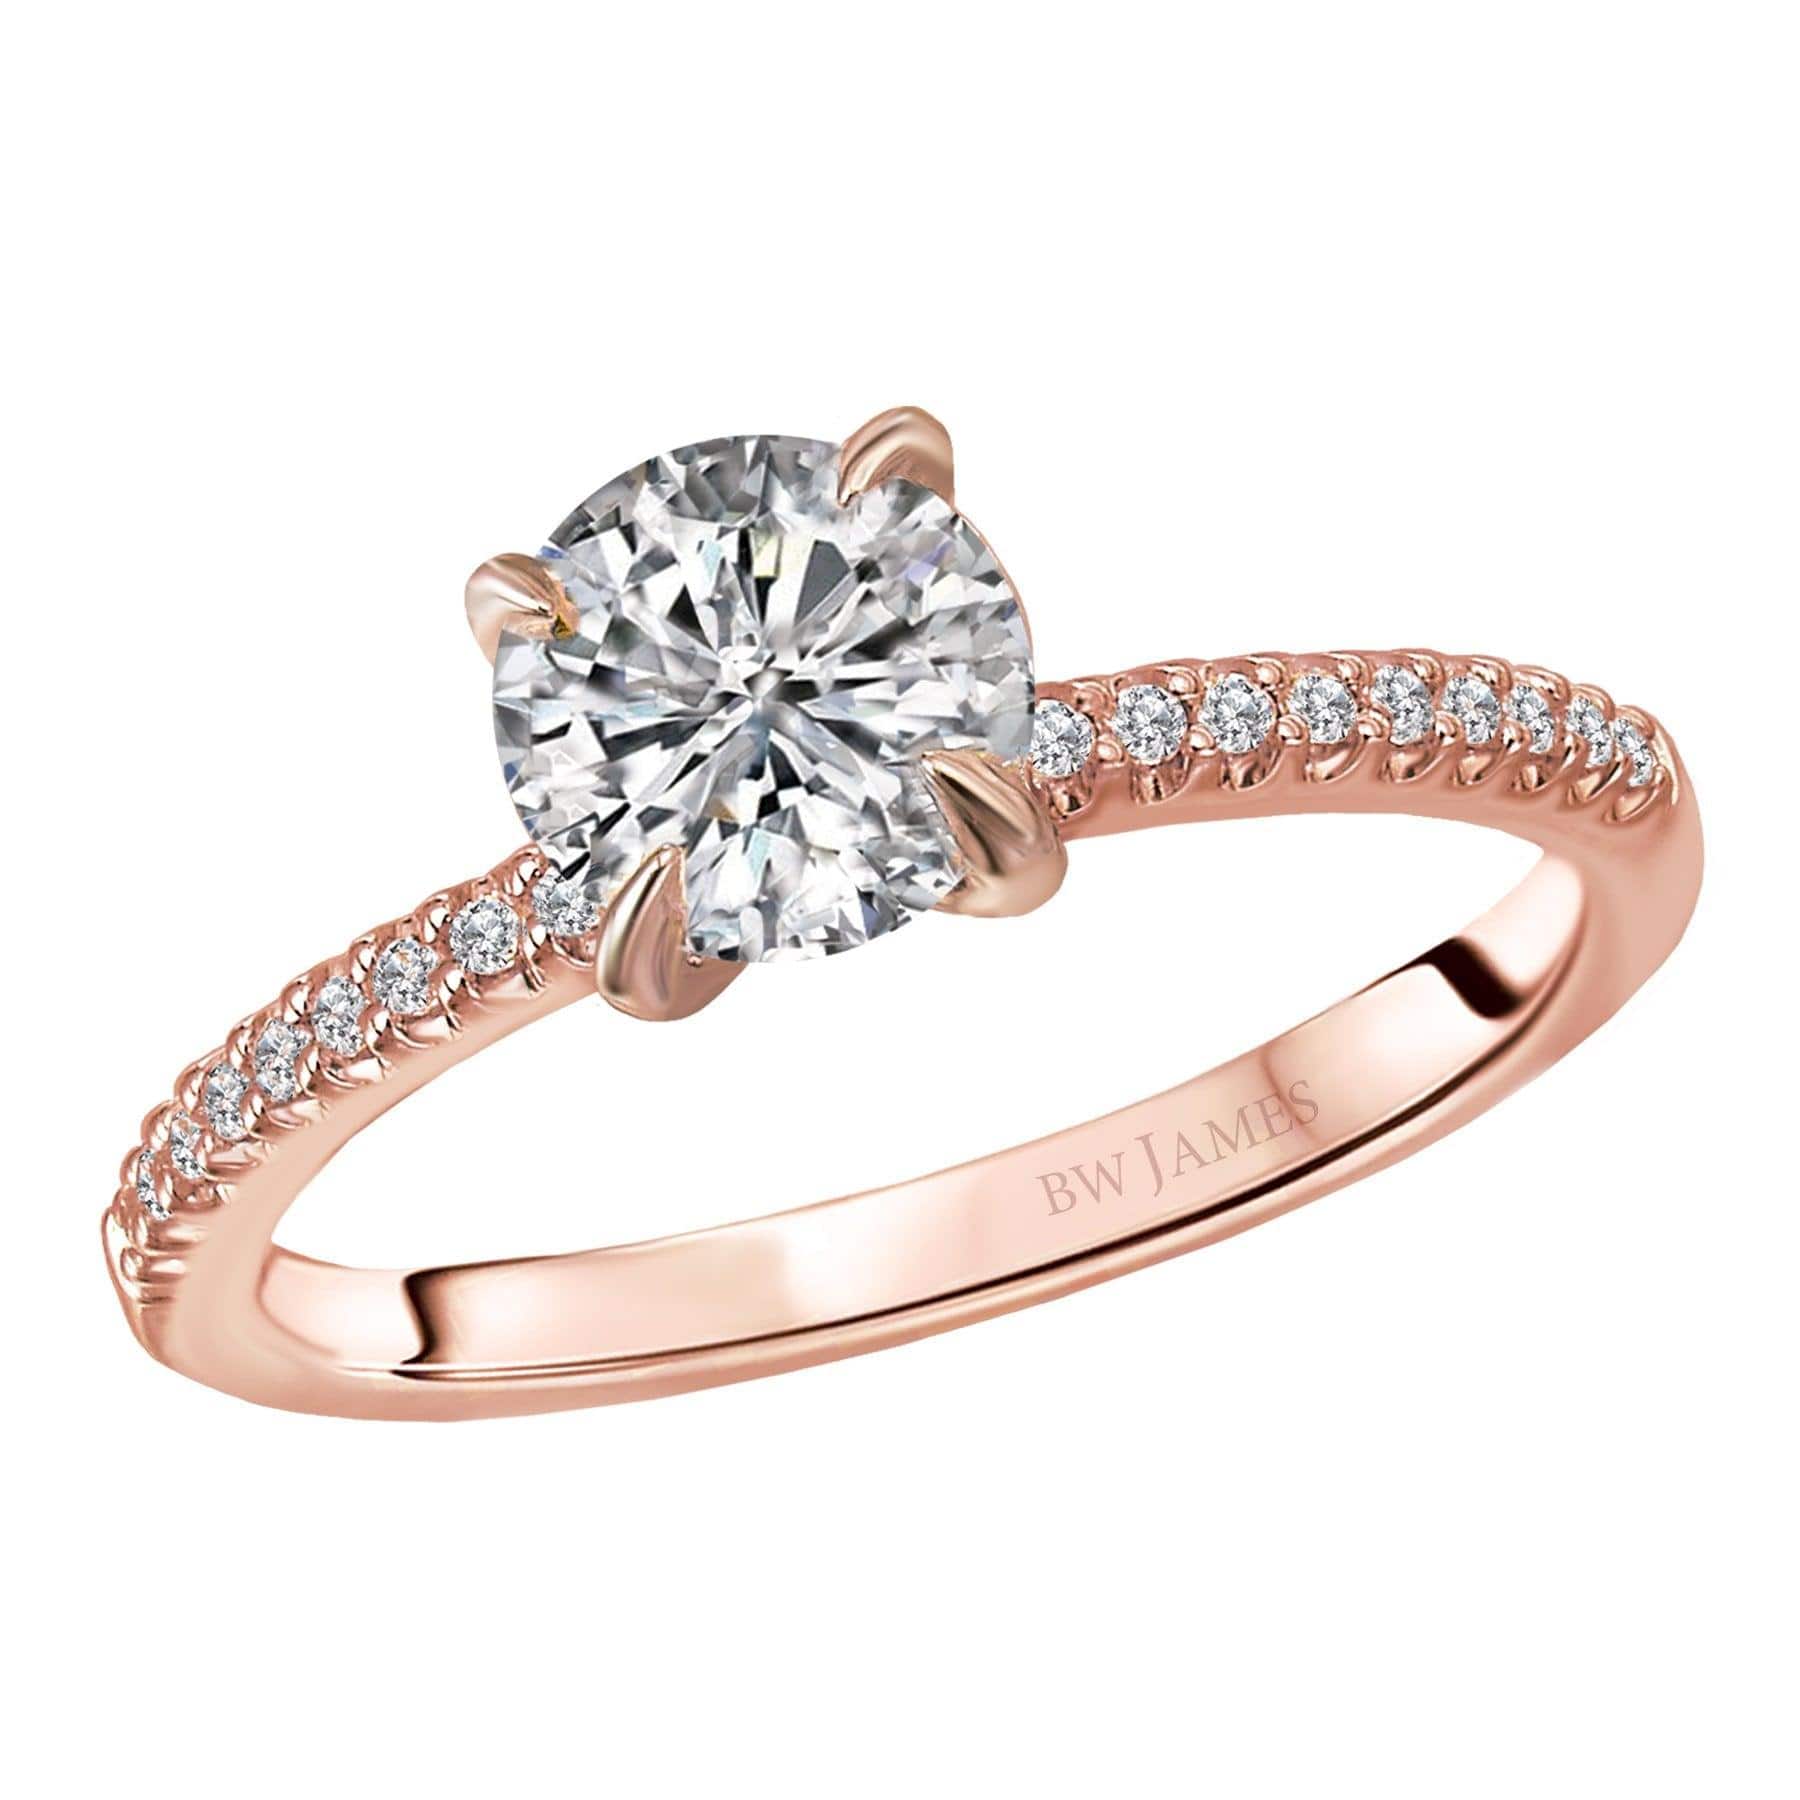 BW JAMES Engagement Rings "The Savannah" Classic Semi-Mount Diamond Ring